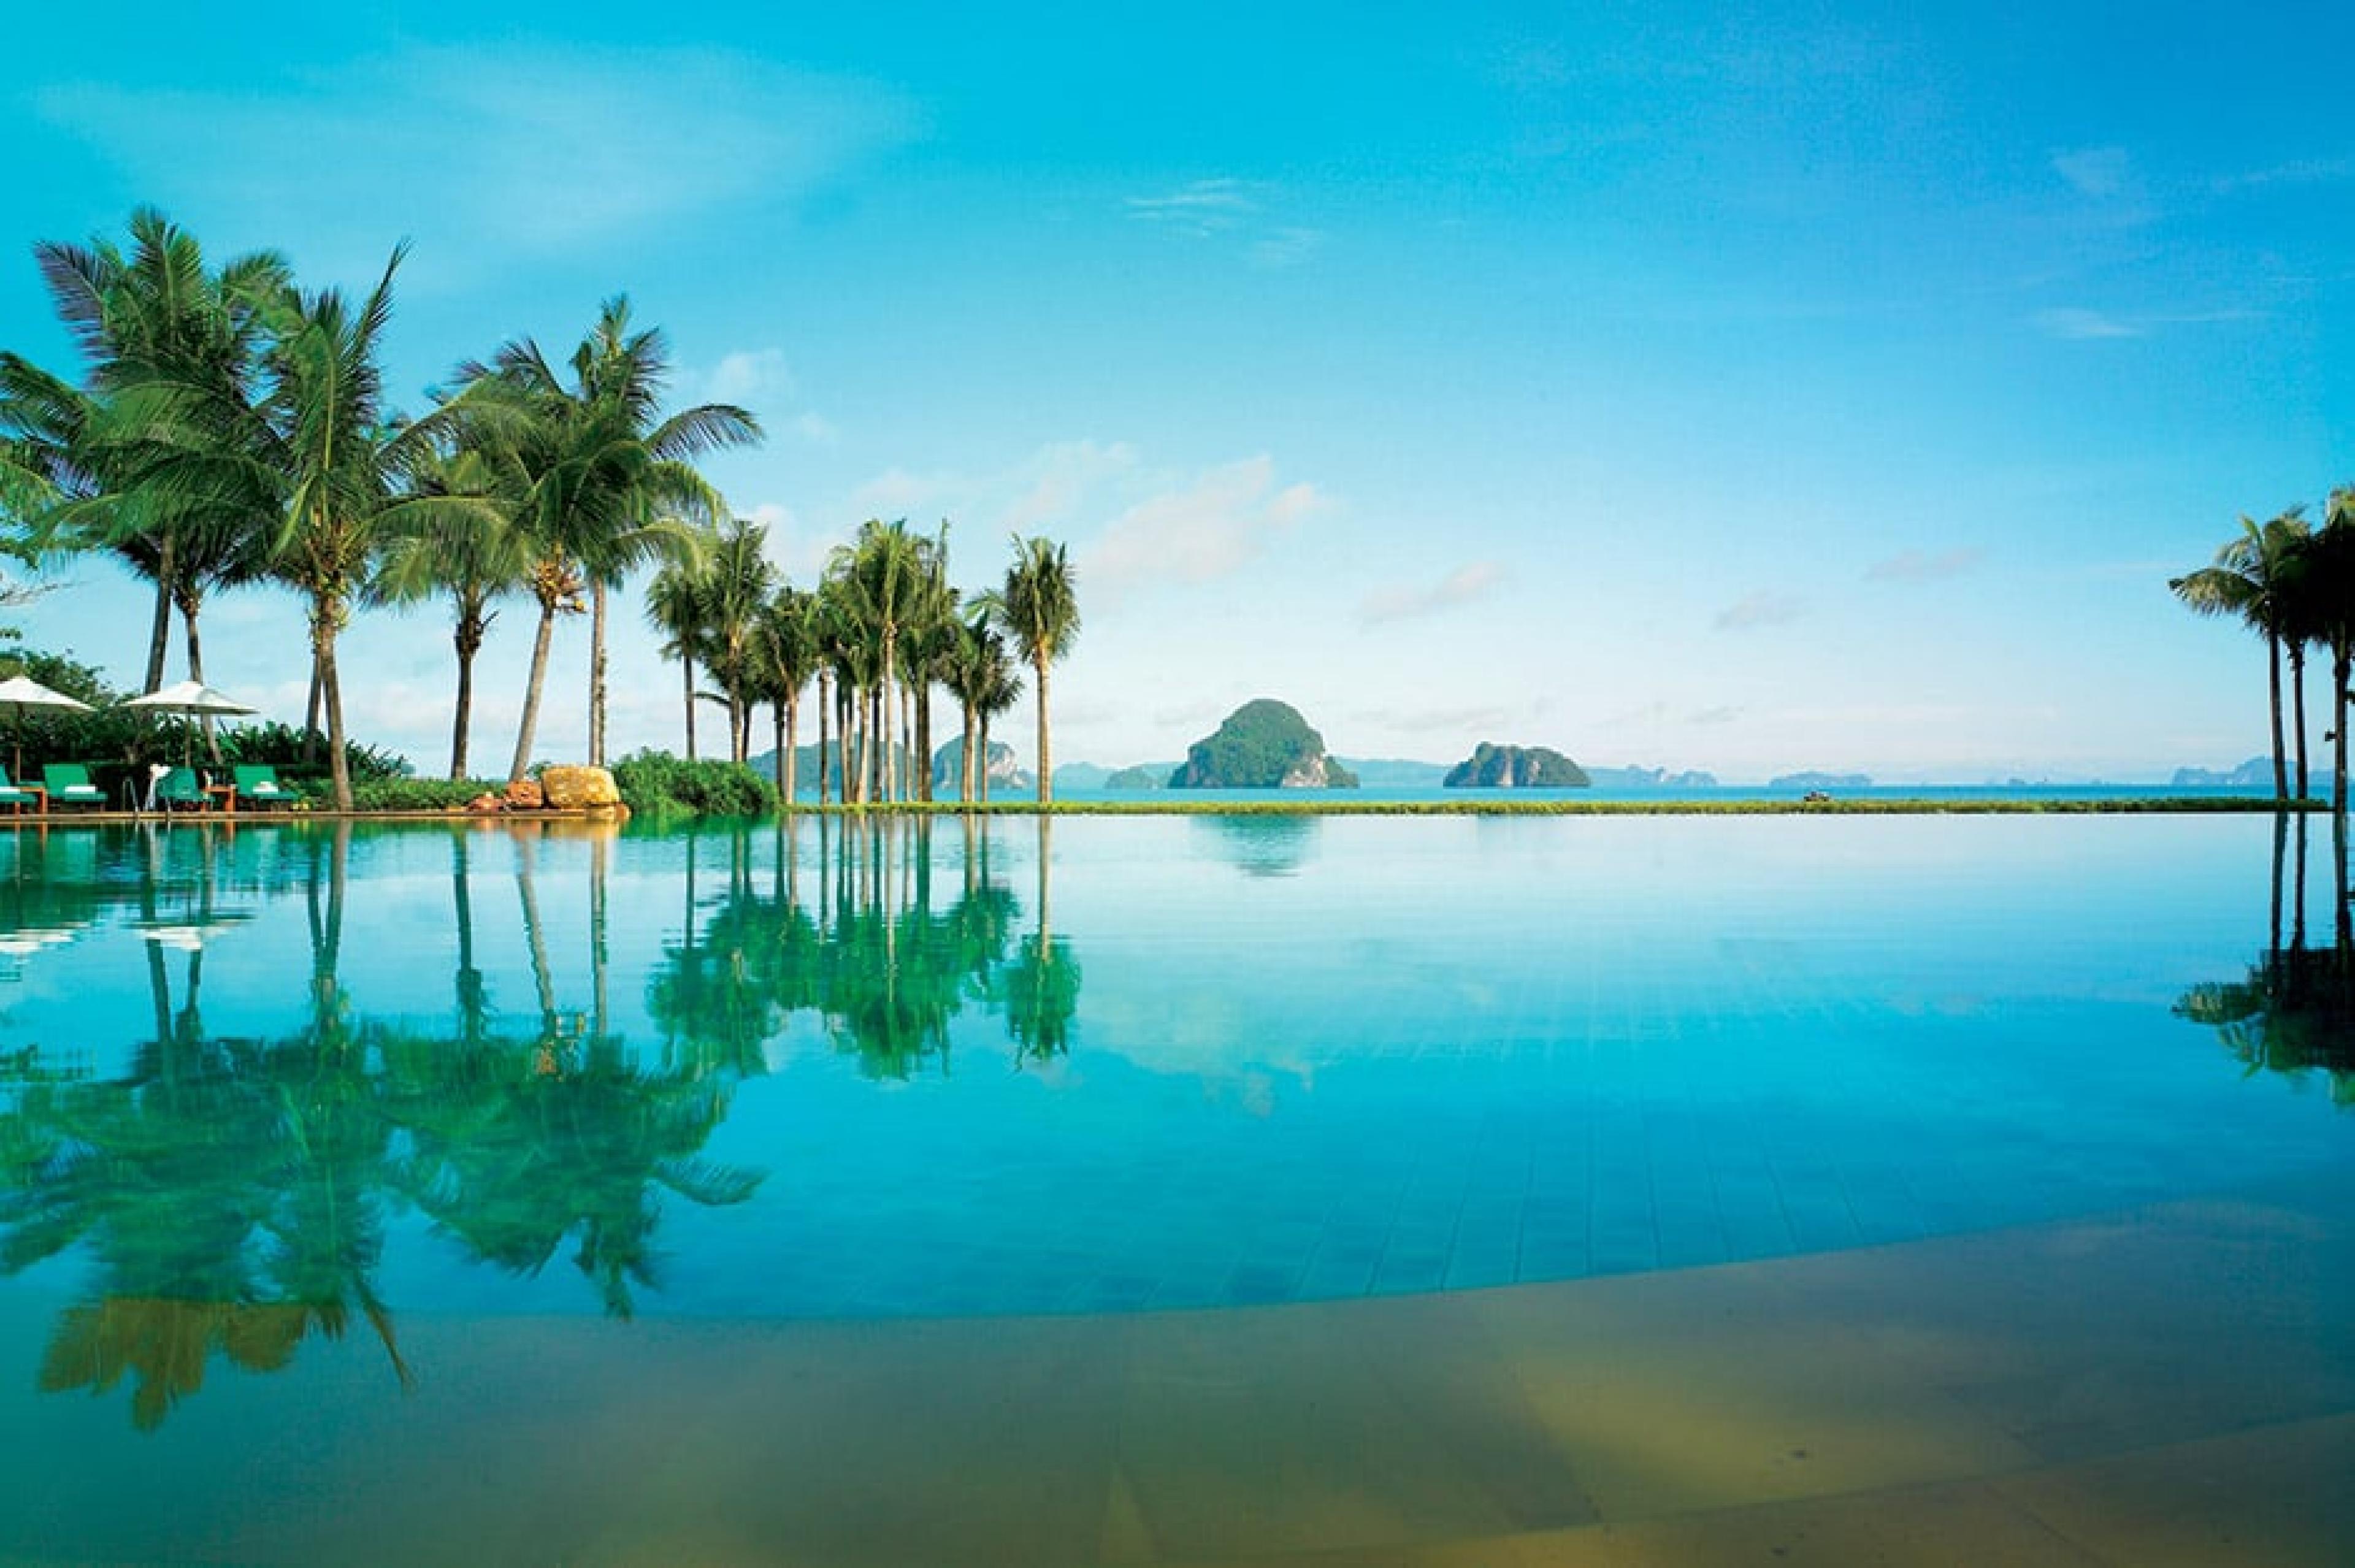 Exterior view - Phulay Bay, a Ritz-Carlton Reserve, Krabi Province, Thailand - Courtesy Christopher Cypert